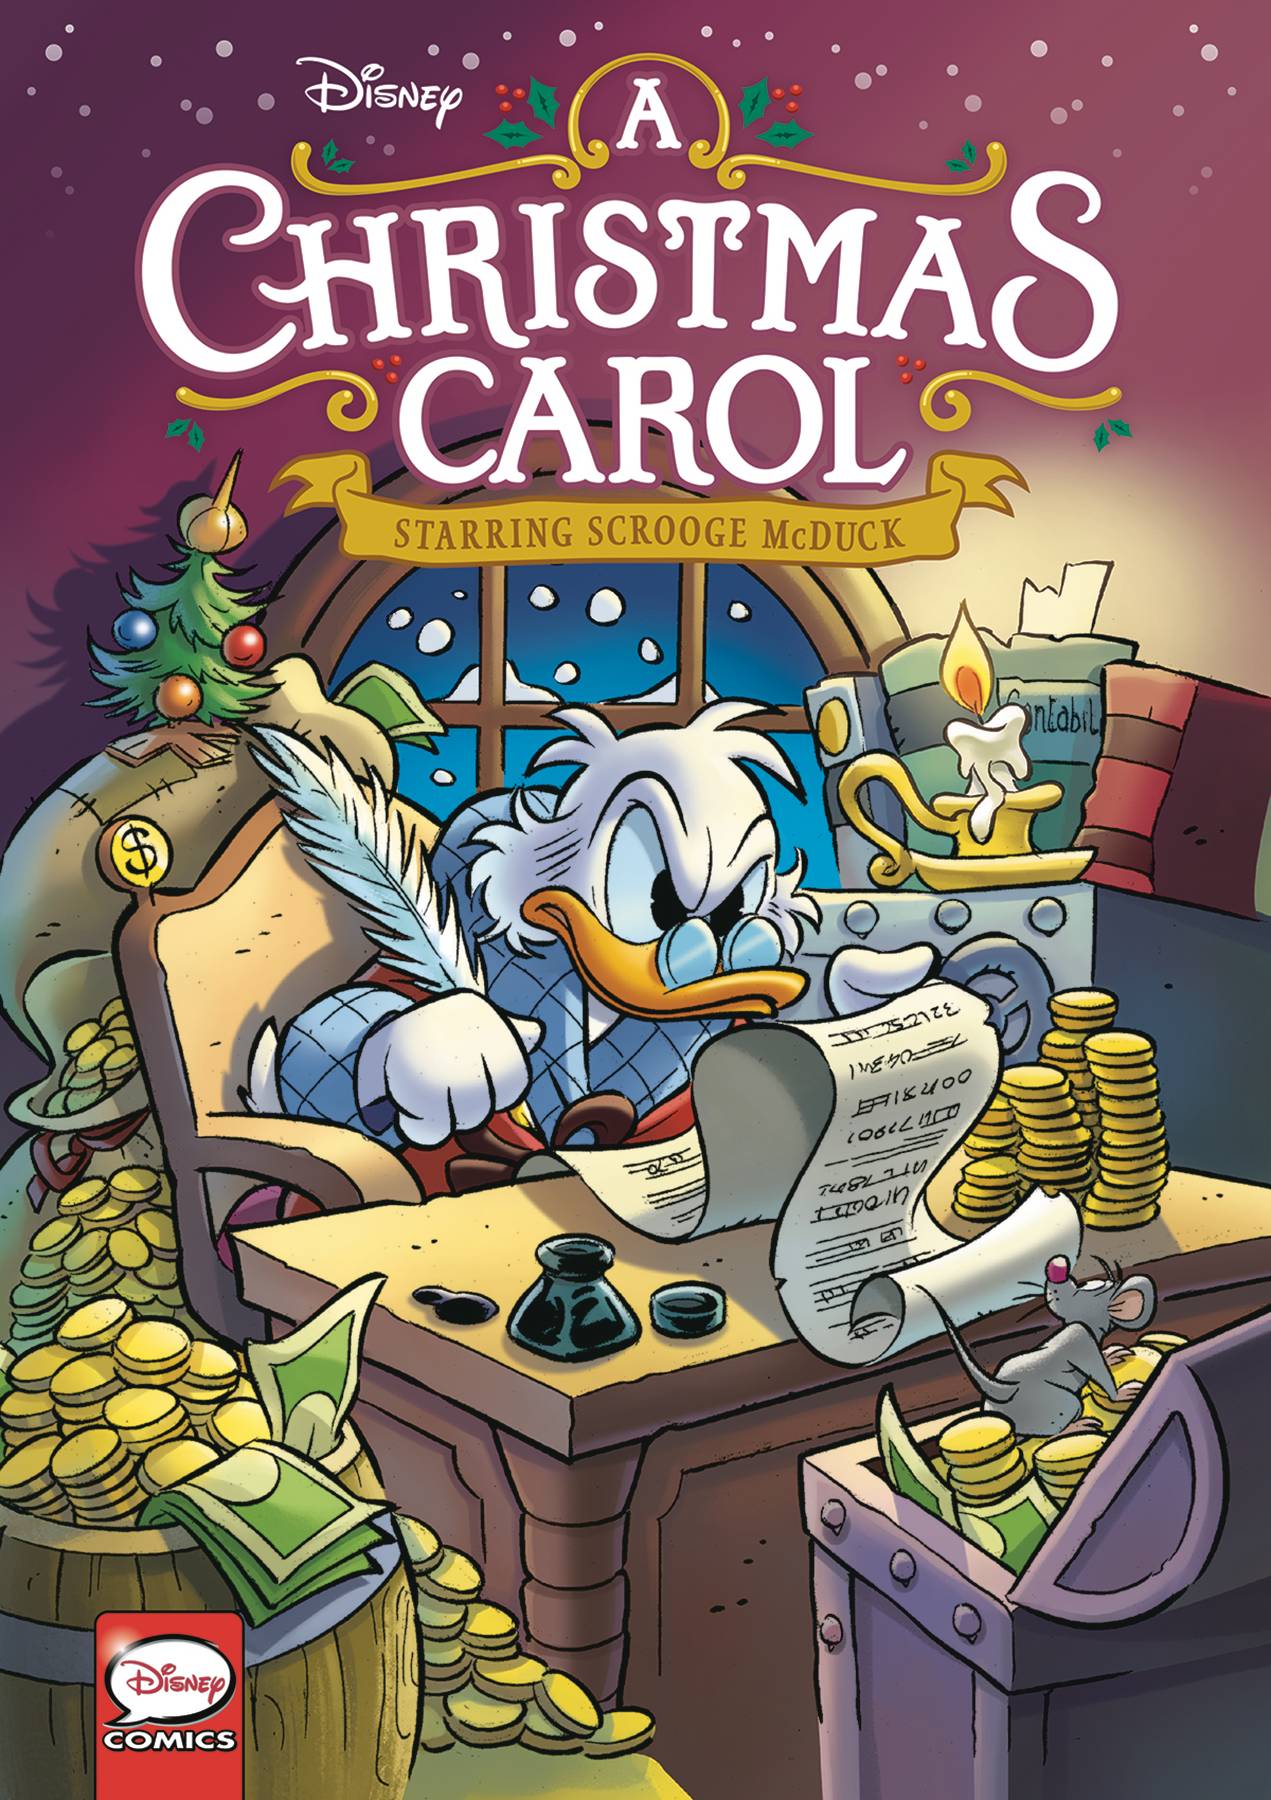 Disney Christmas Carol Starring Scrooge Mcduck Graphic Novel Comichub